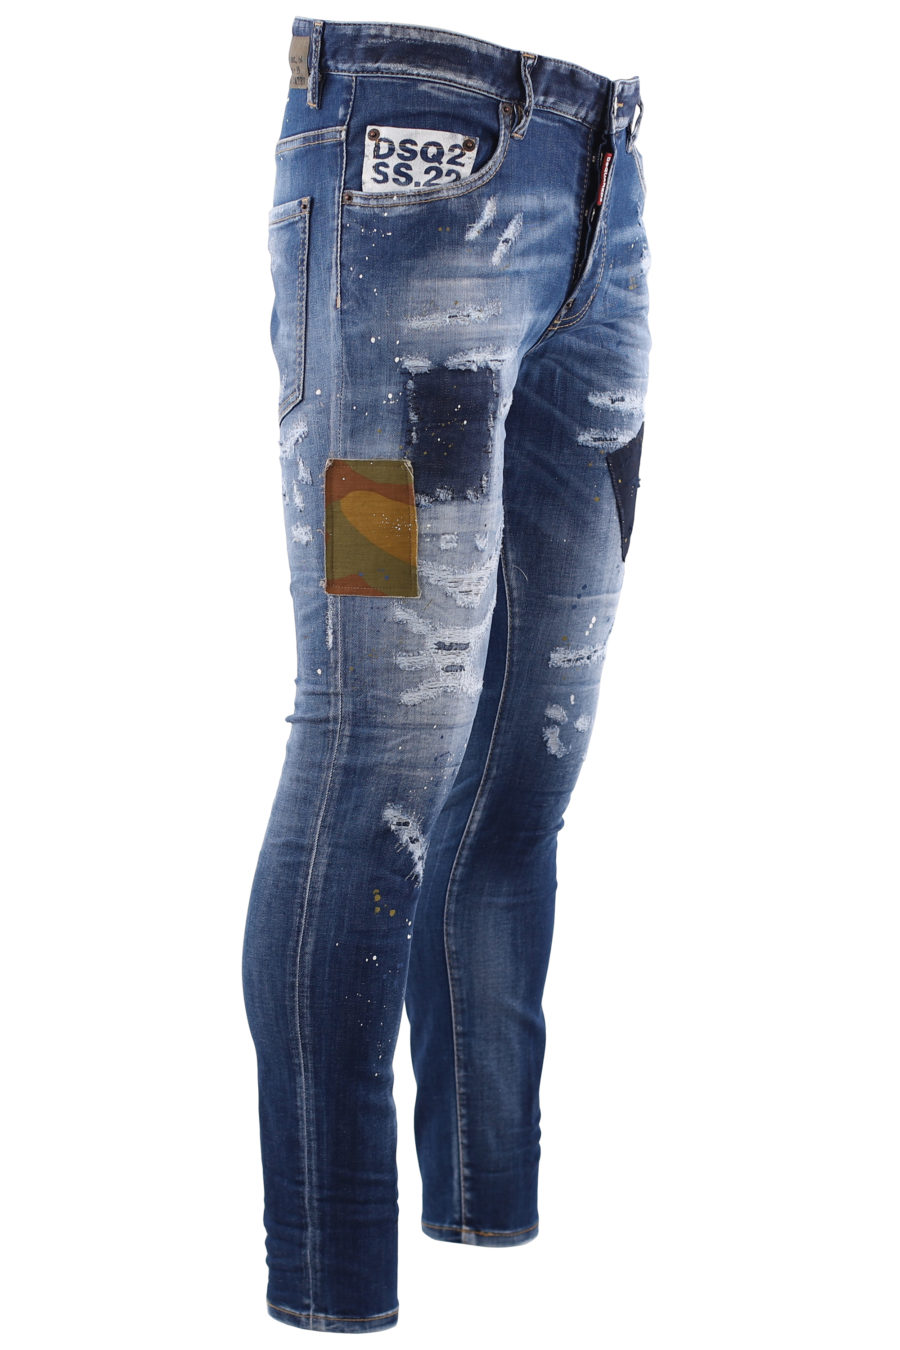 Super twinky jean azul com remendo militar - IMG 6677